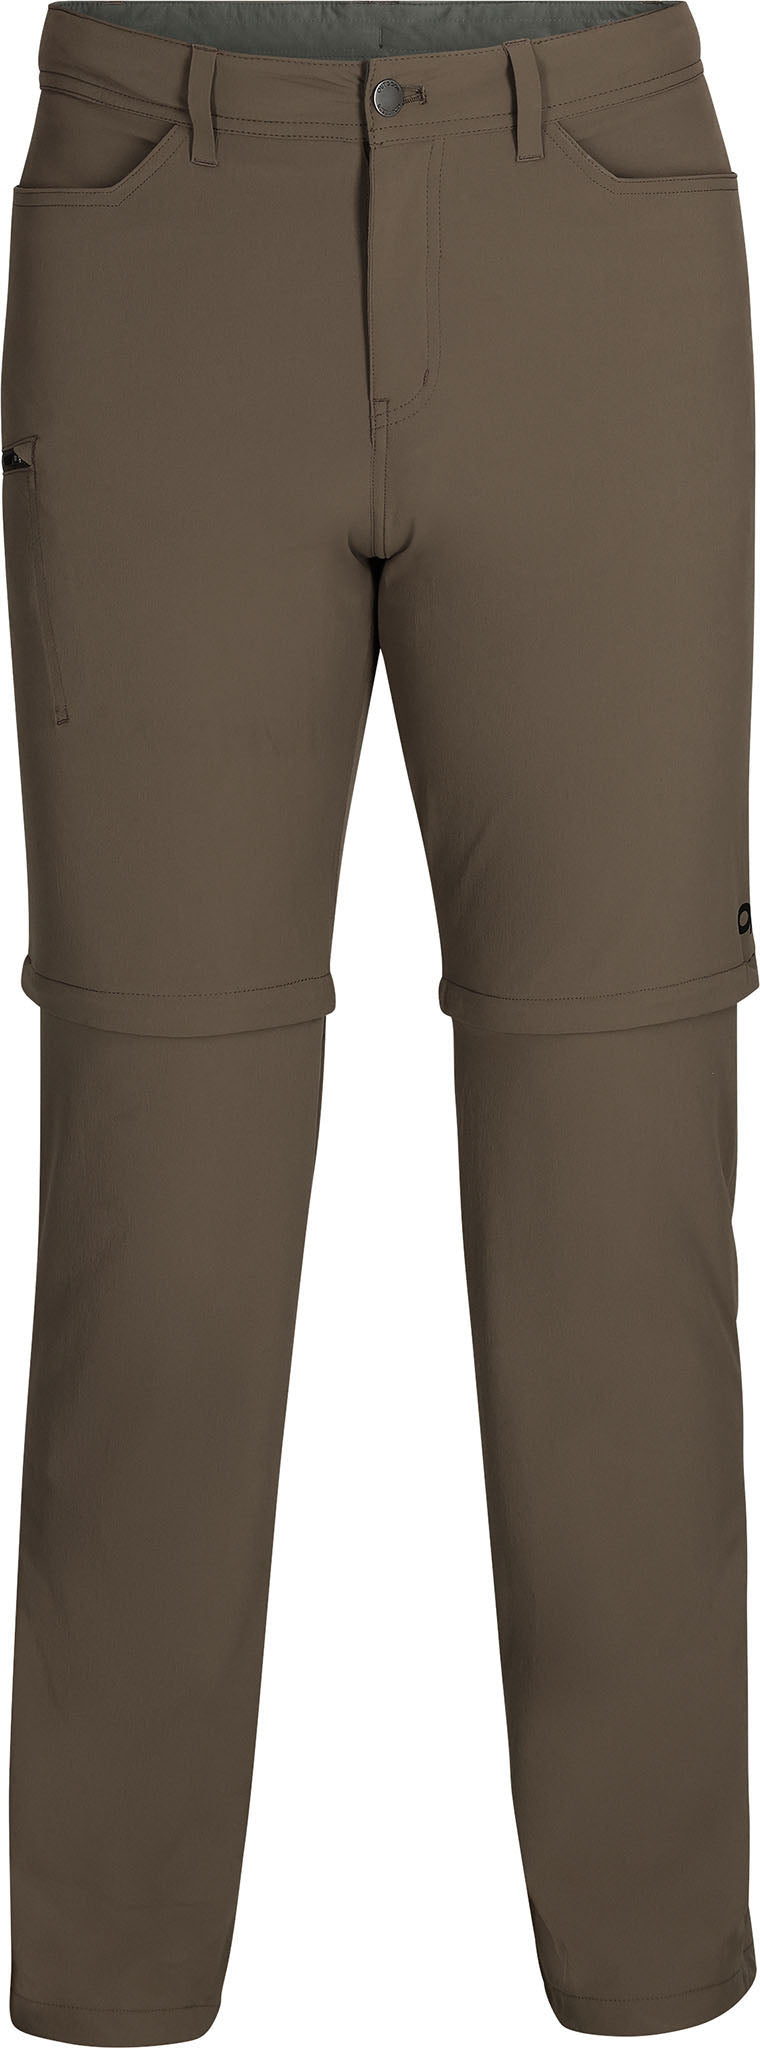 Outdoor Research Ferrosi Convertible Pants - 30 Inseam - Men's